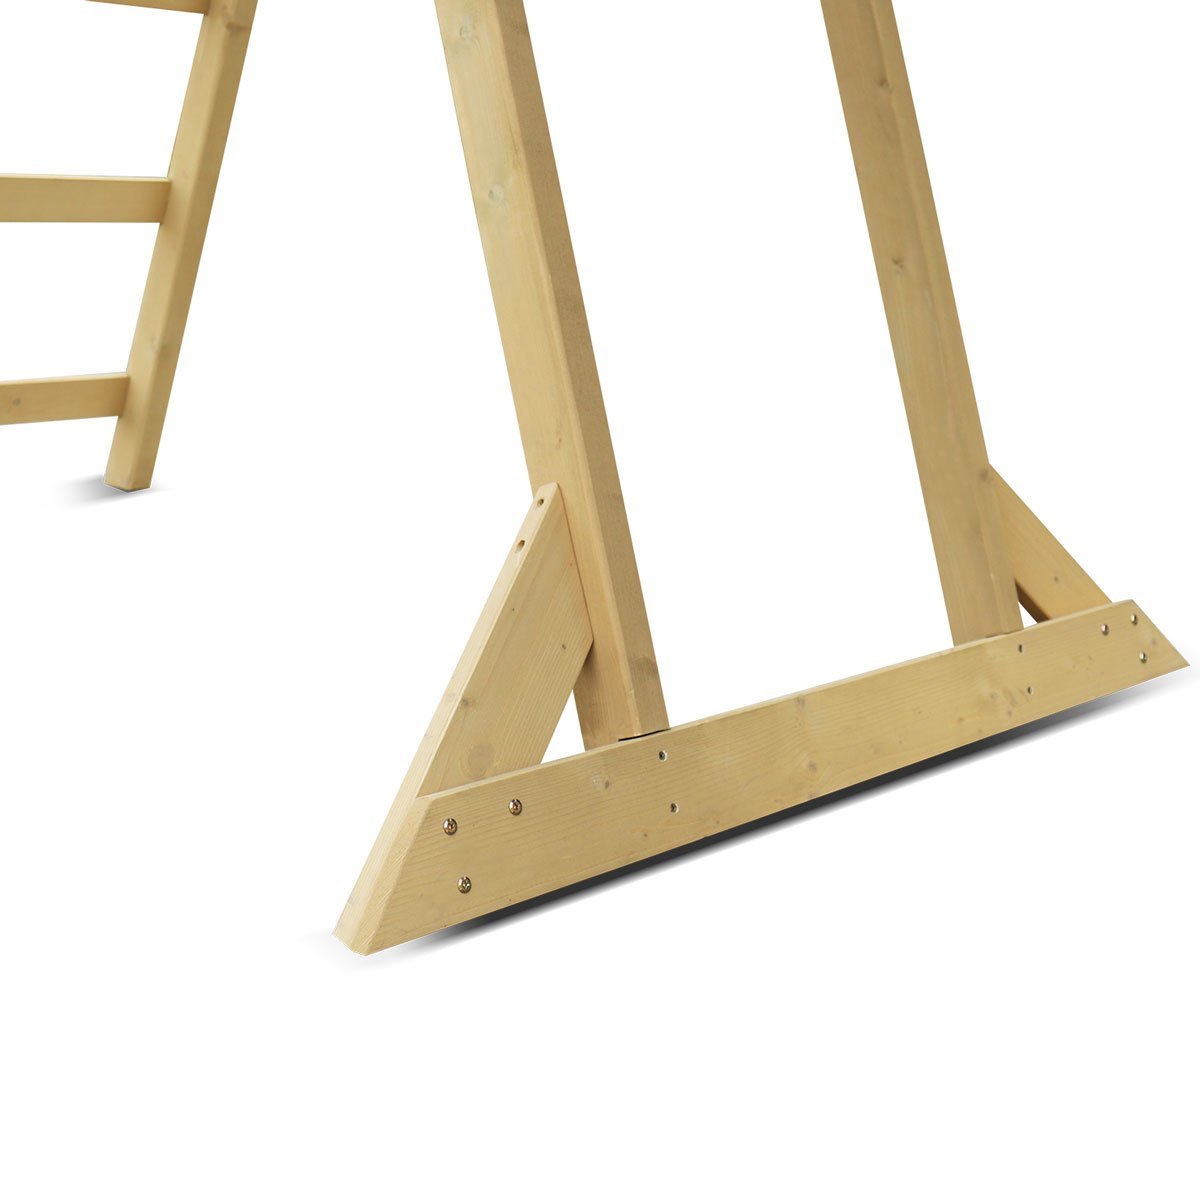 Buy online Green sunshine slide with sturdy wooden ladder product Australia